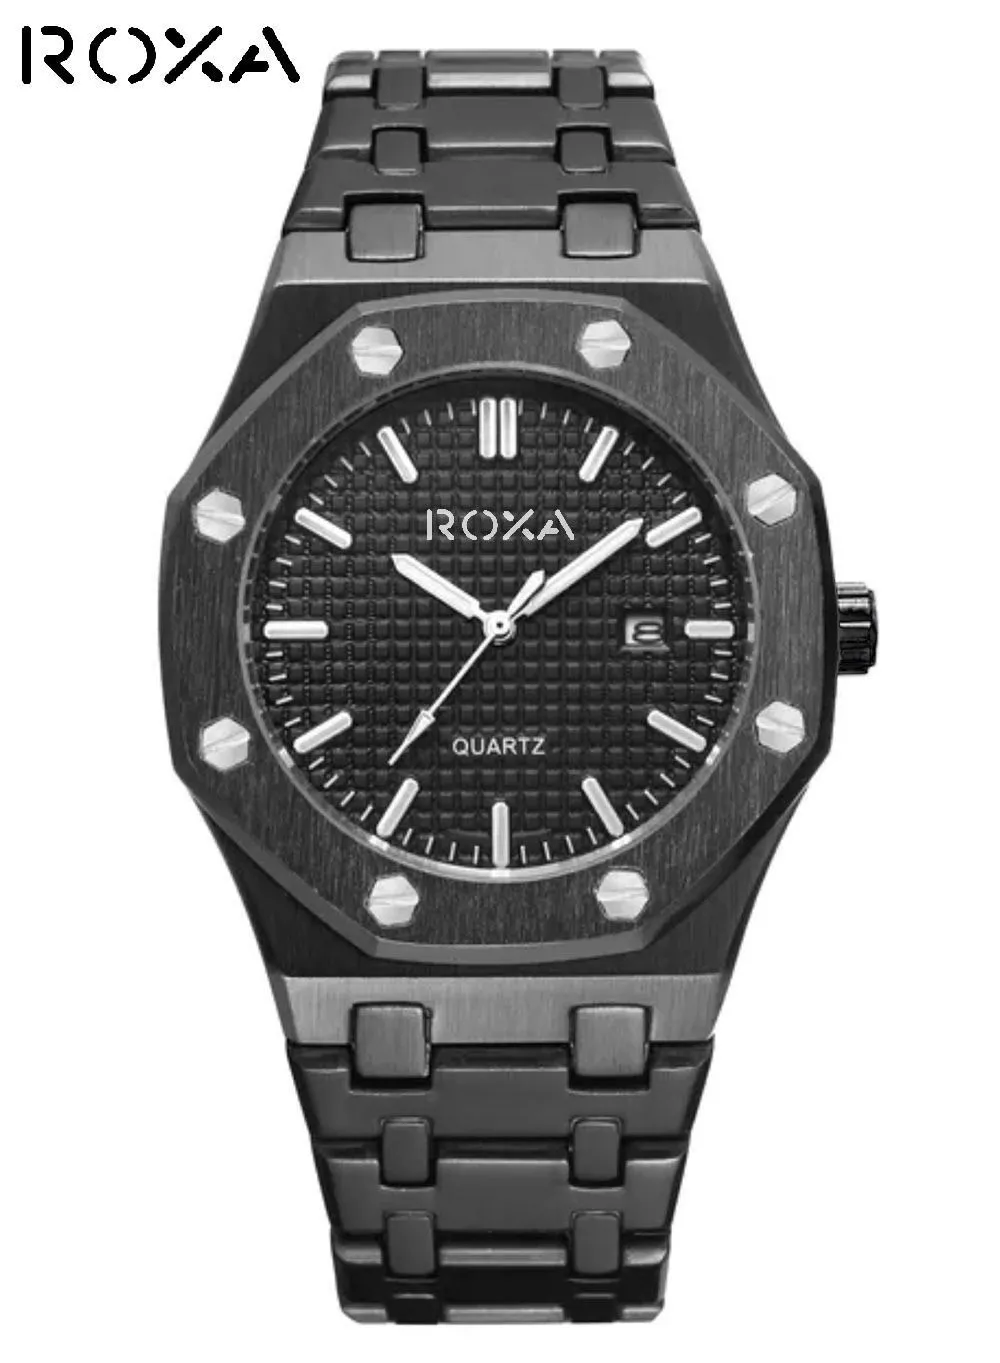 ROXA Stainless Steel Analog Watch RX001 - Black